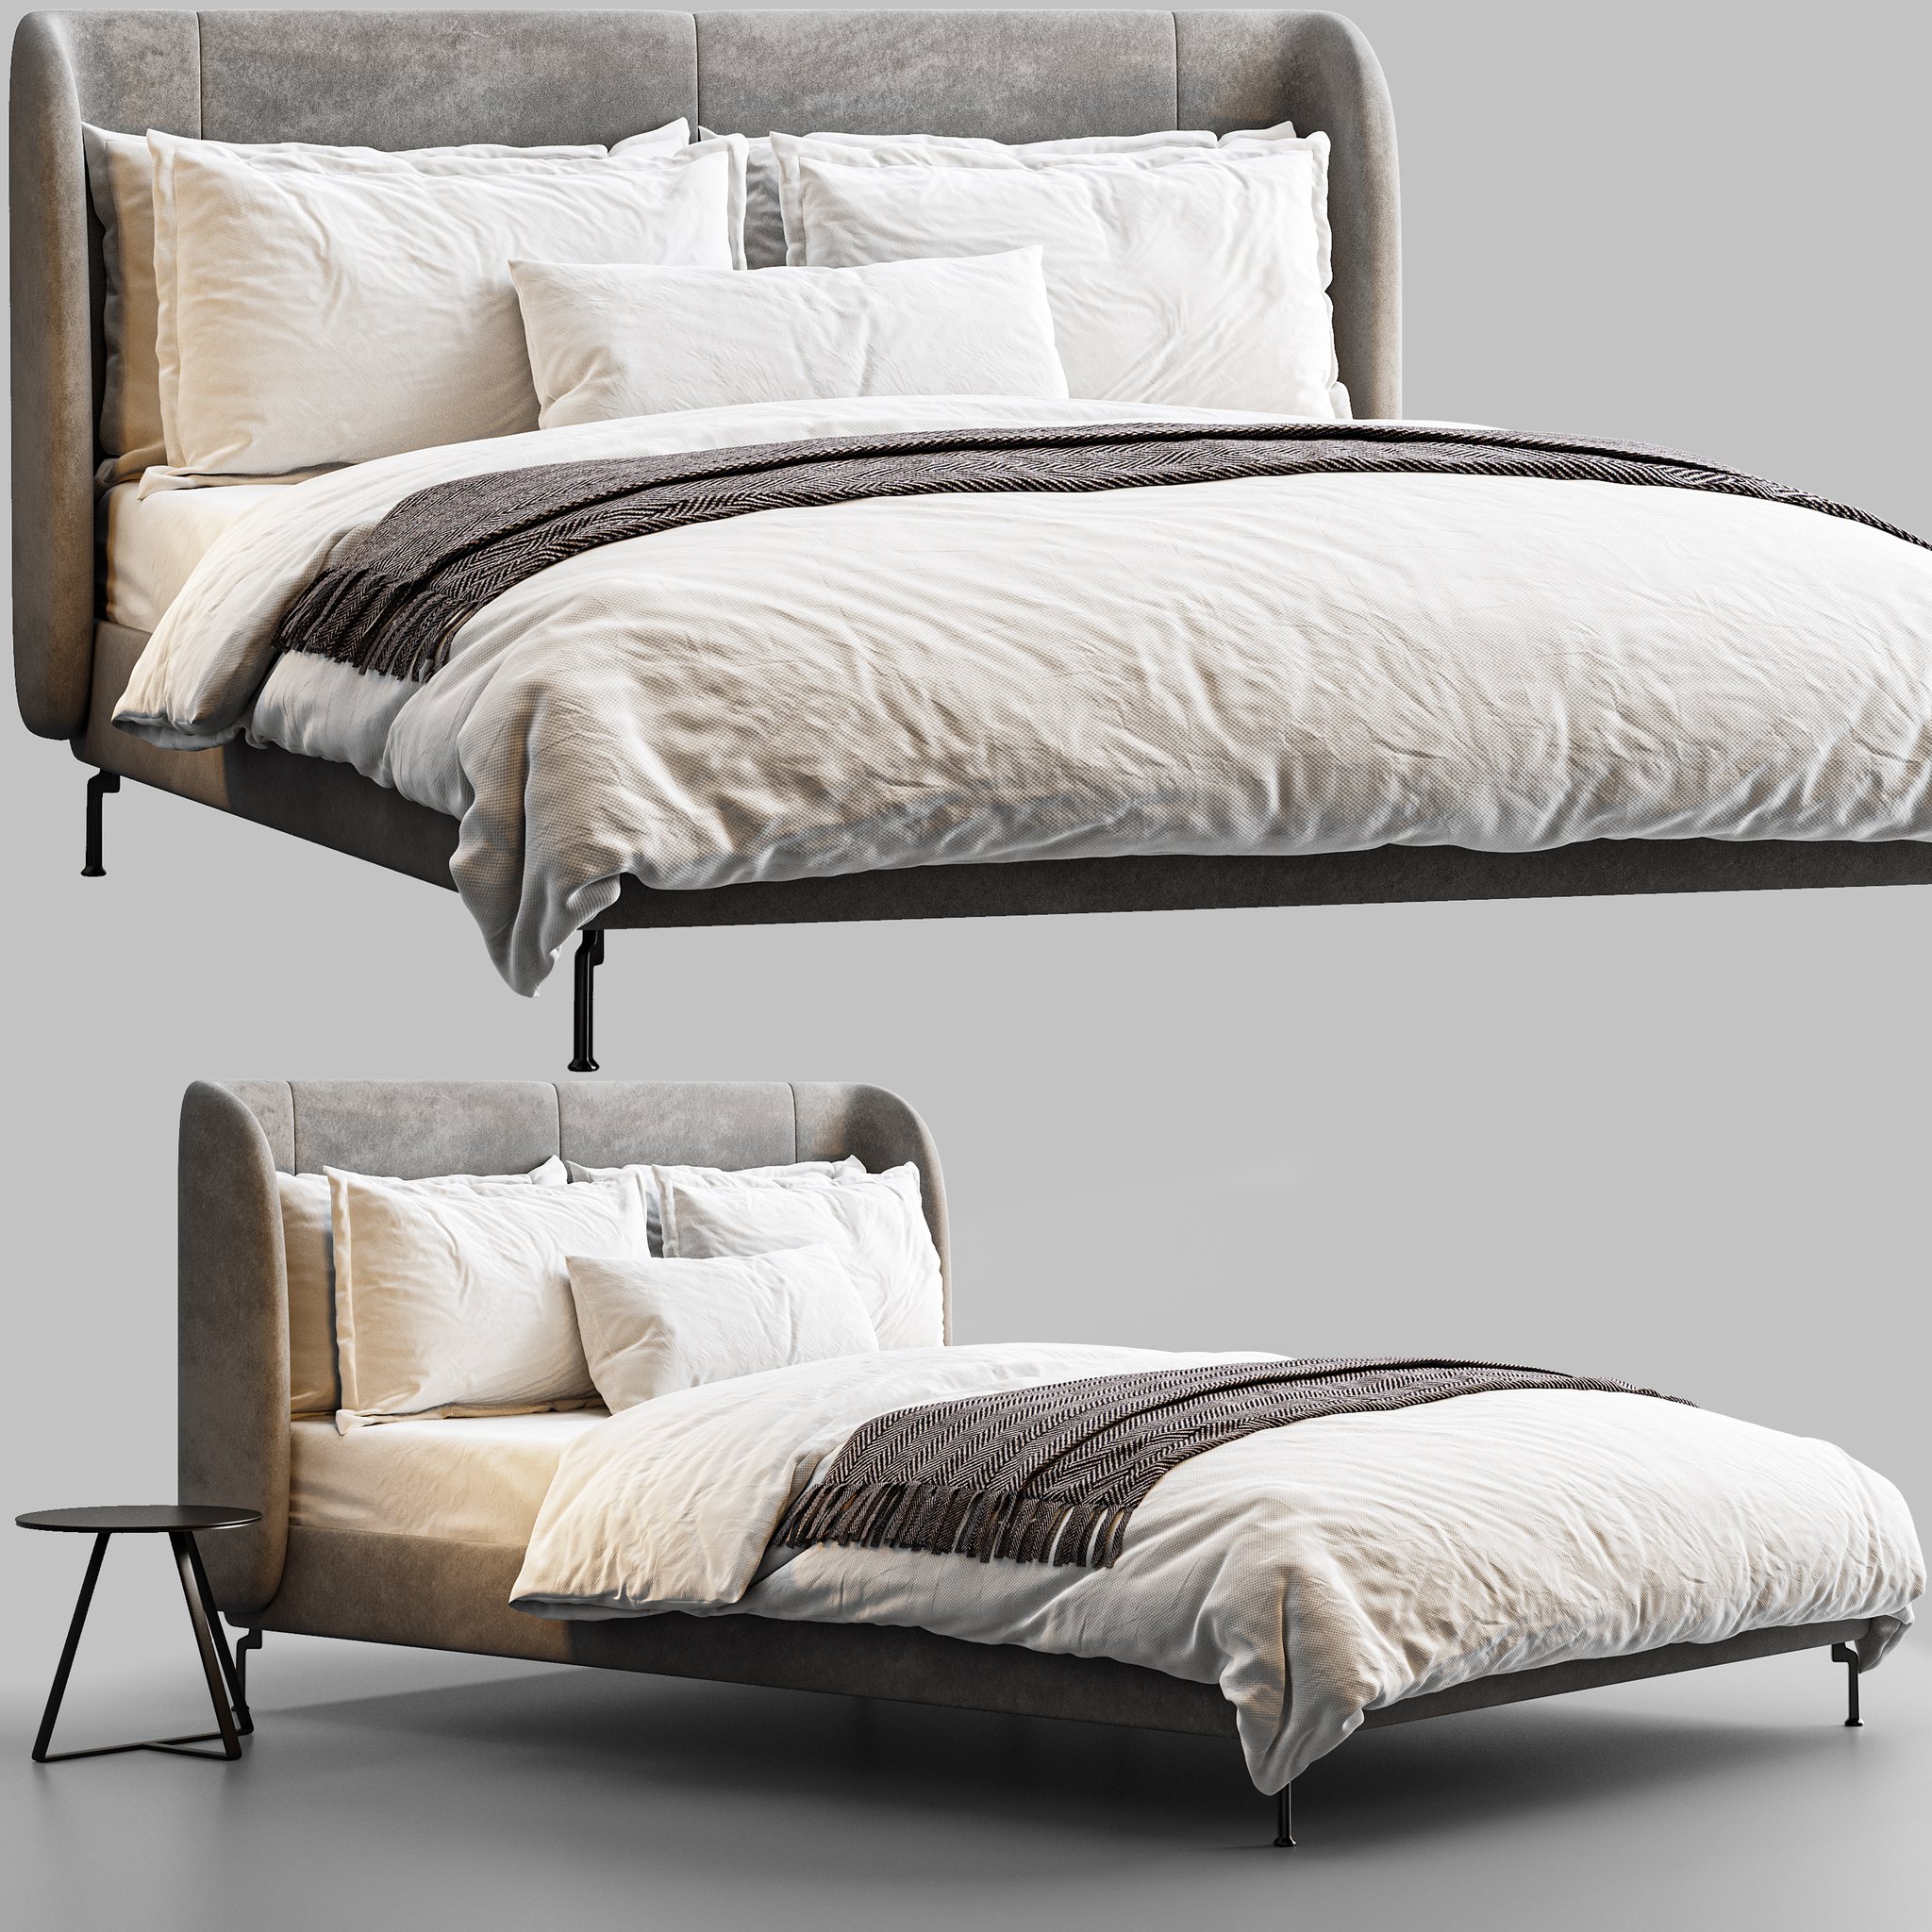 galblaas gehandicapt kooi IKEA TUFJORD bed Ikea Tufjord | FREE 3D Bed models | BlenderKit